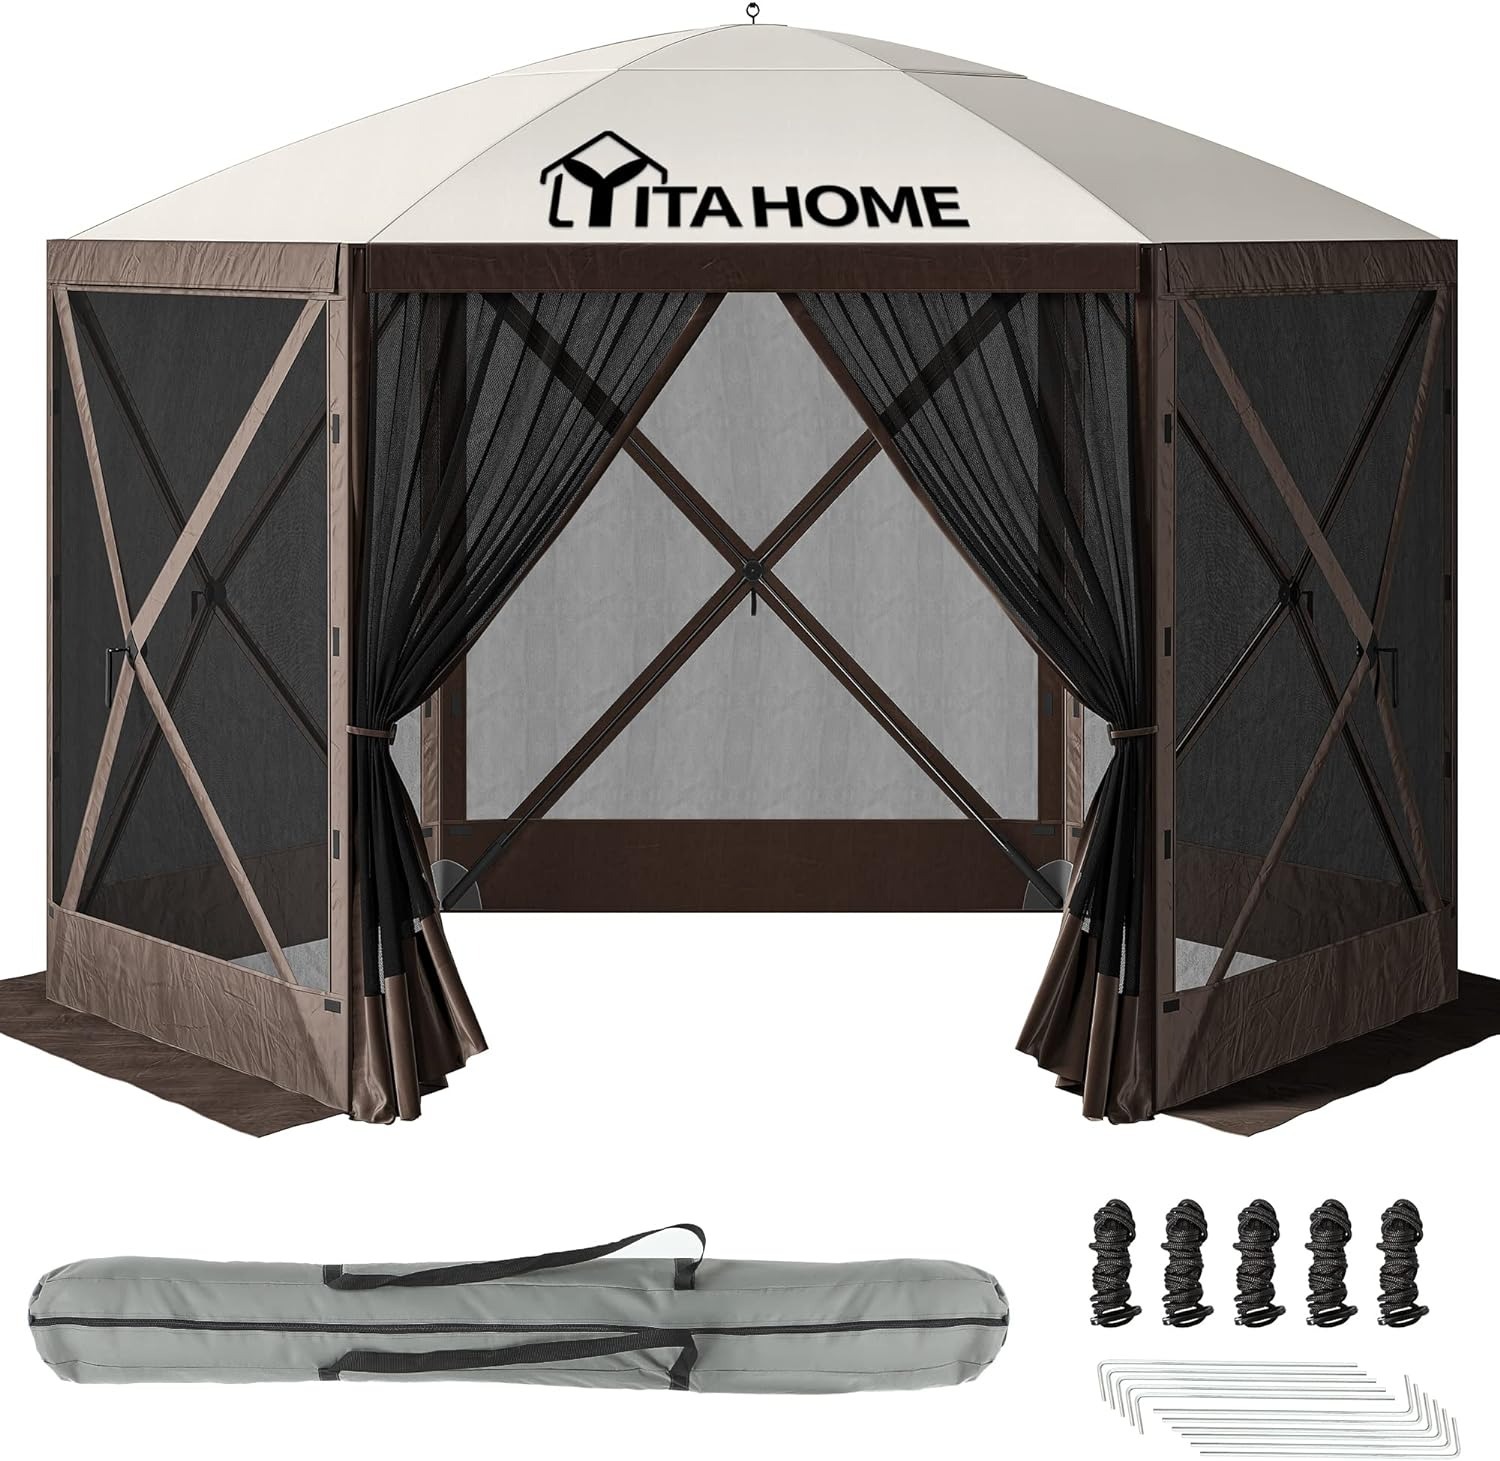 11.5" x 11.5" YITAHOME 6-Sided Camping Gazebo w/ Mesh Windows (Gray or Brown) $112 + Free Shipping